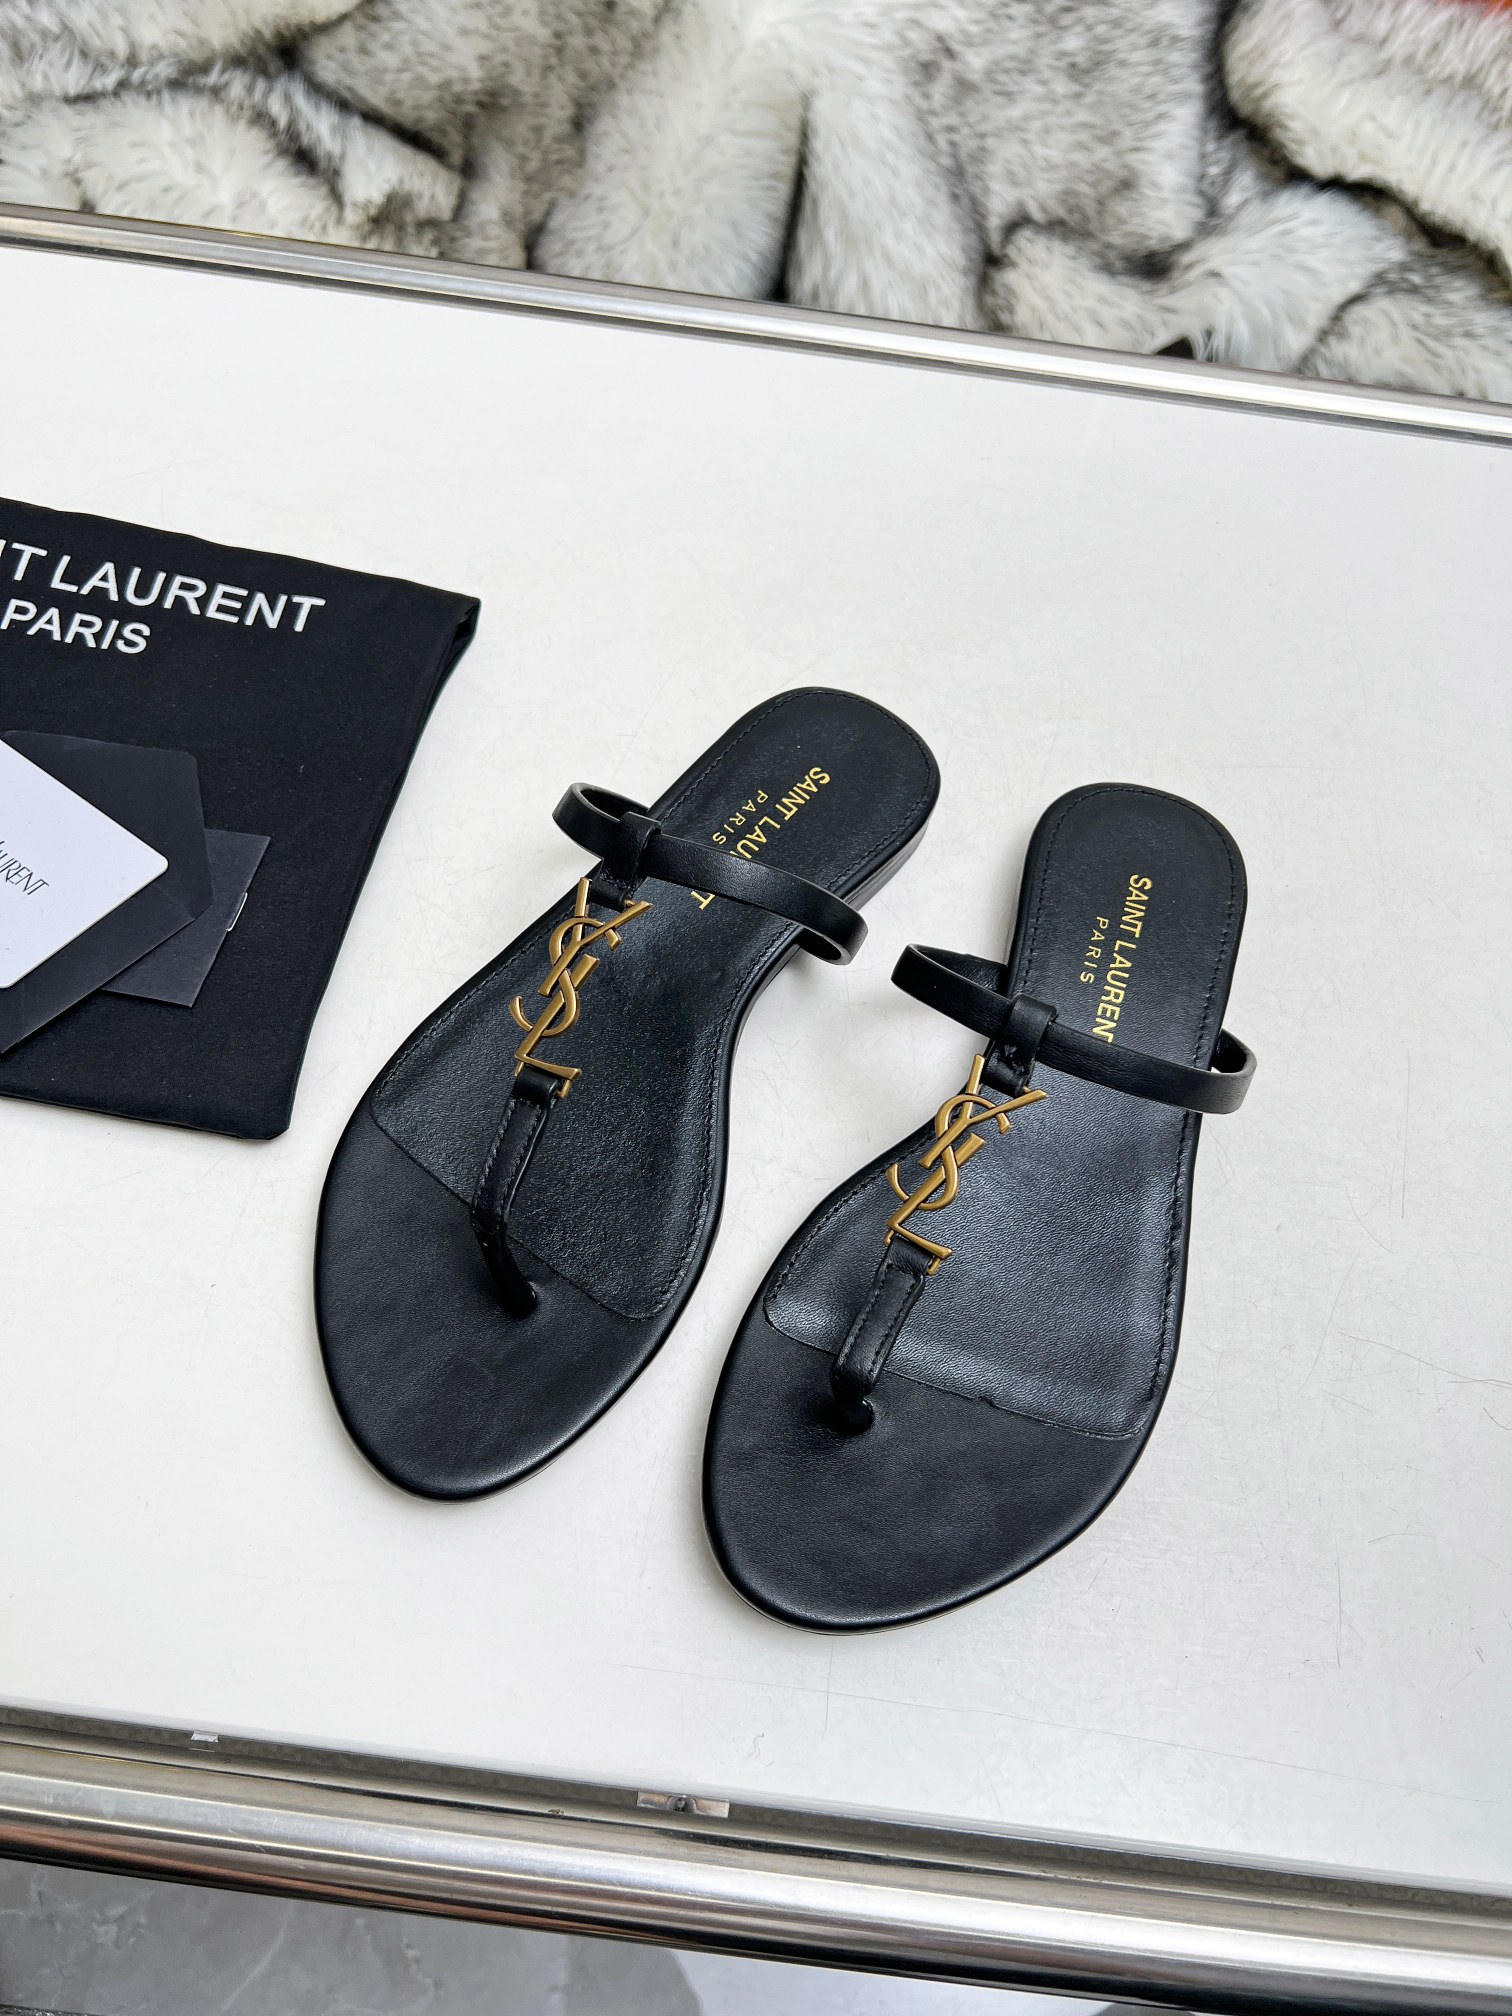 Yves Saint Laurent Schuhe Badelatschen Gold Hardware Rindsleder Schaffell